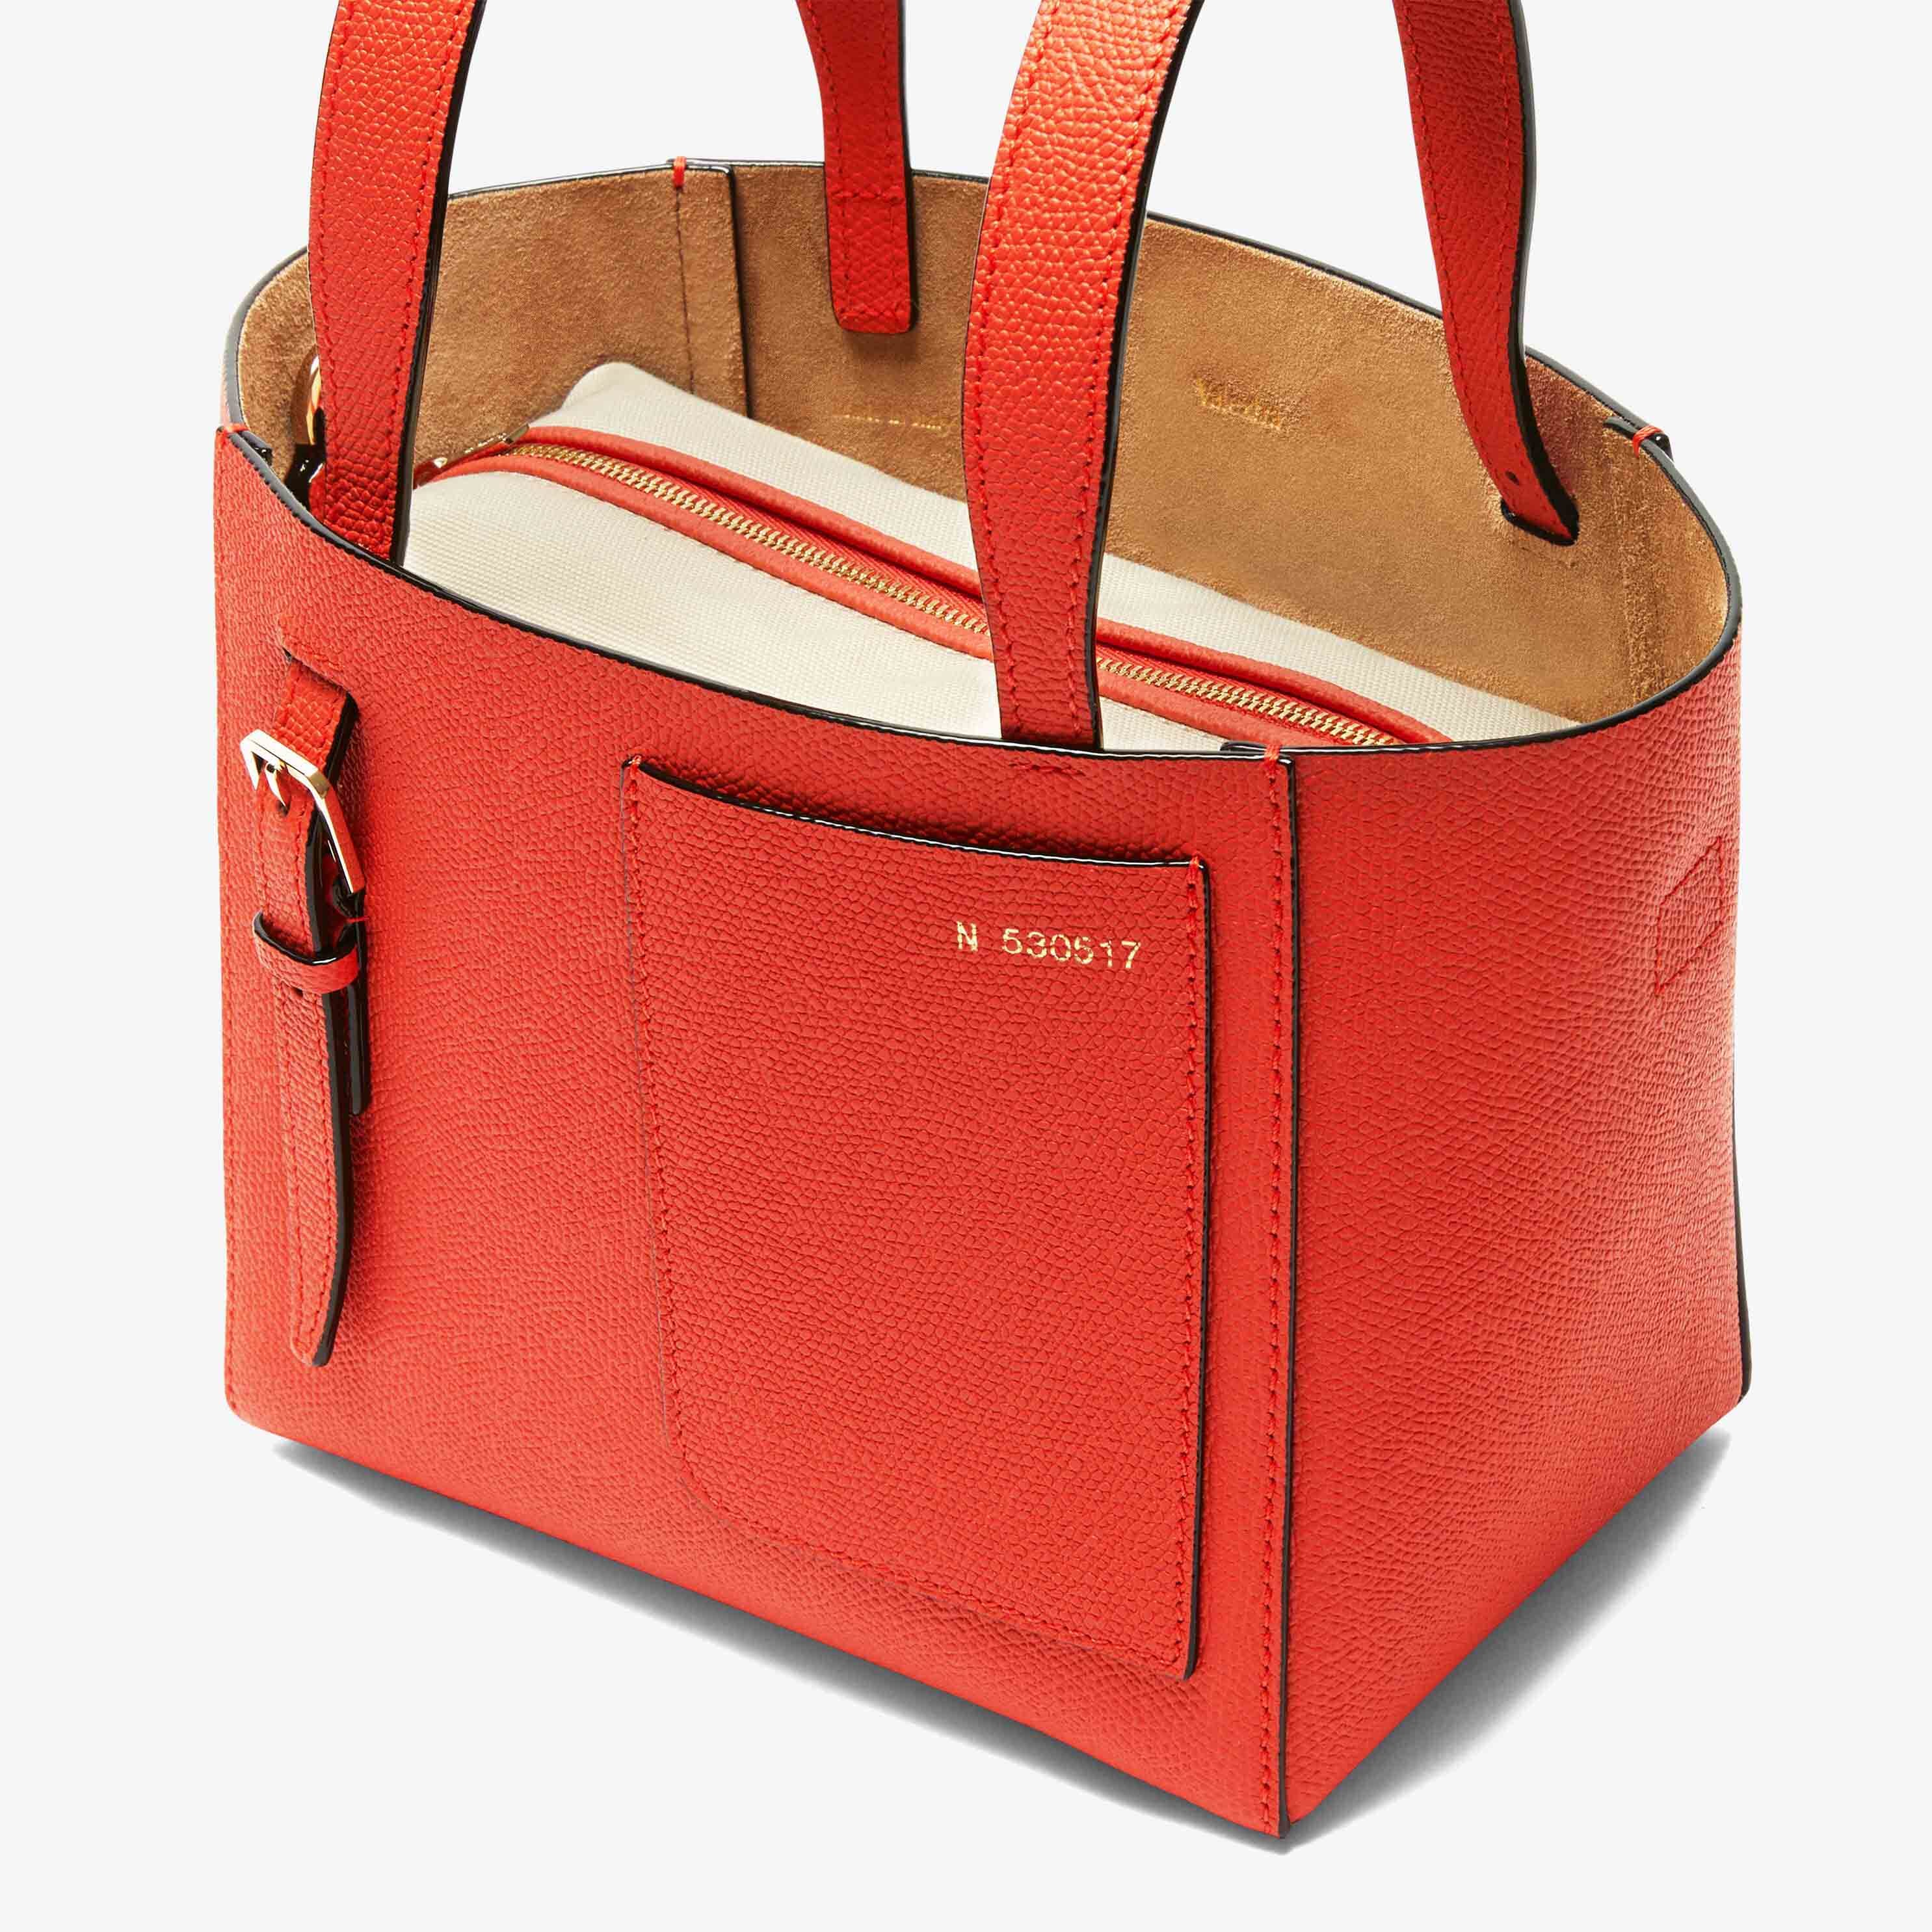 Luxury Italian leather top handle bags, mini bags | Valextra